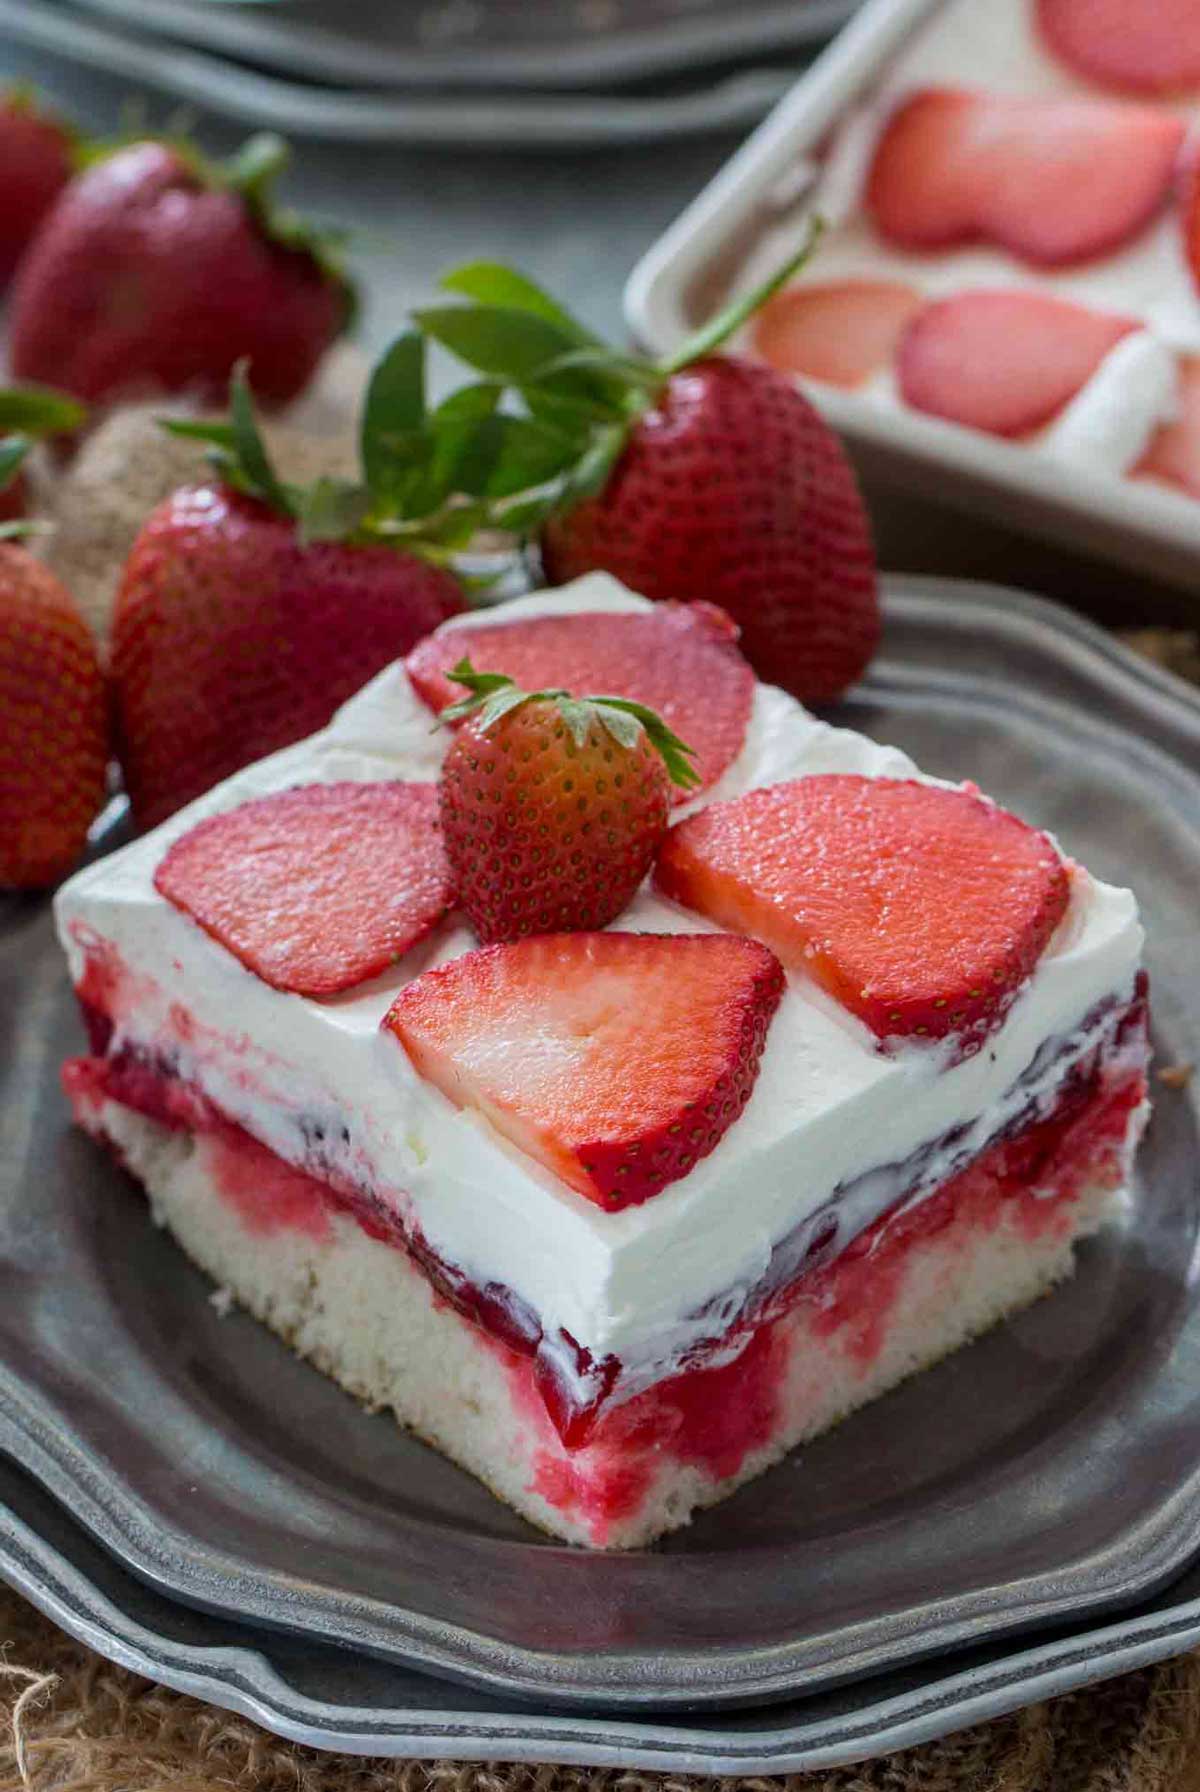 Best Homemade Strawberry Jello Poke Cake Video Sweet And Savory Meals